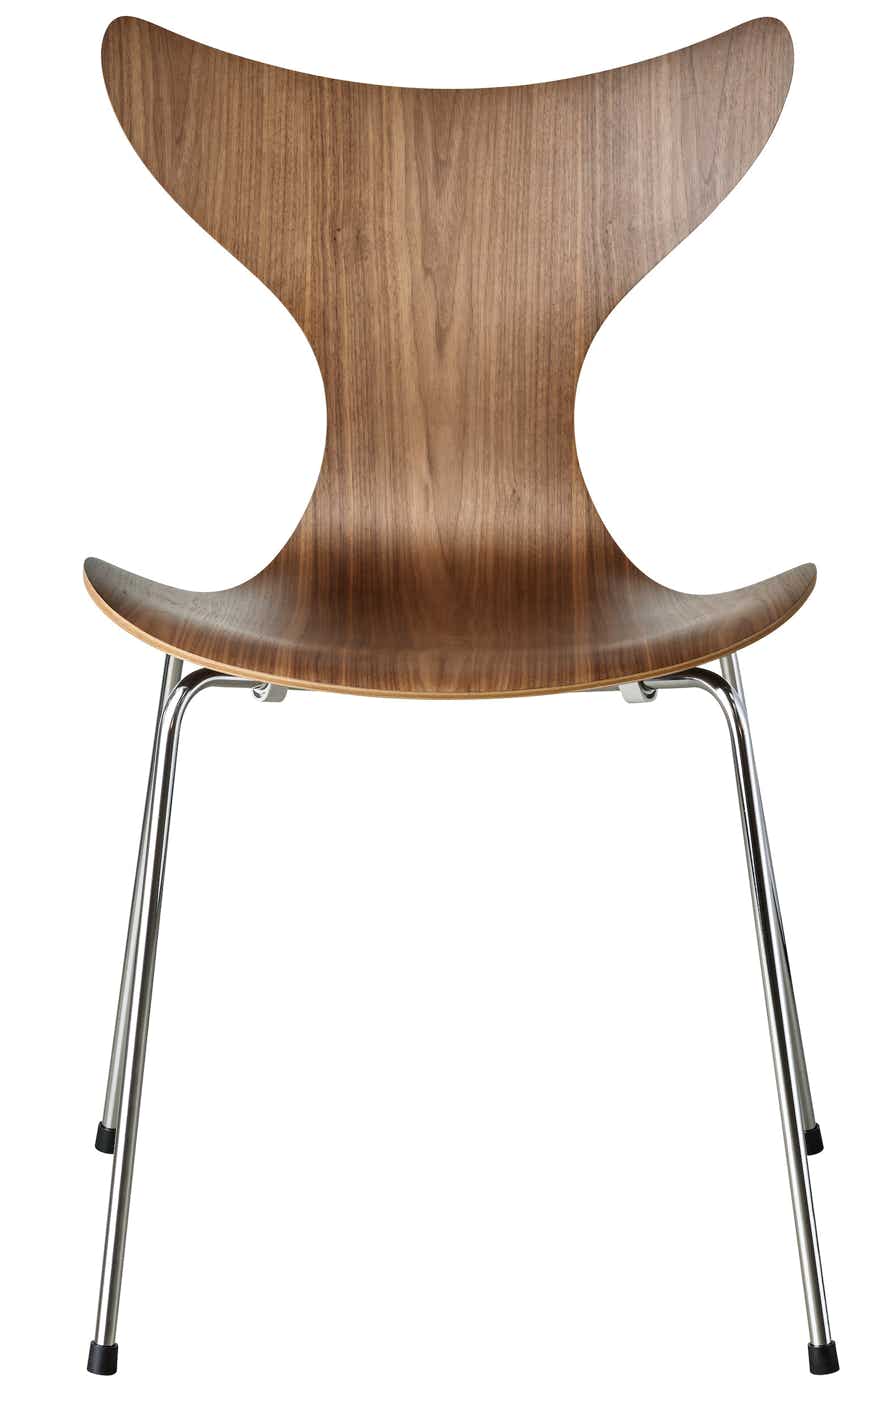 Lily chair   Fritz Hansen – Arne Jacobsen, 1968/70